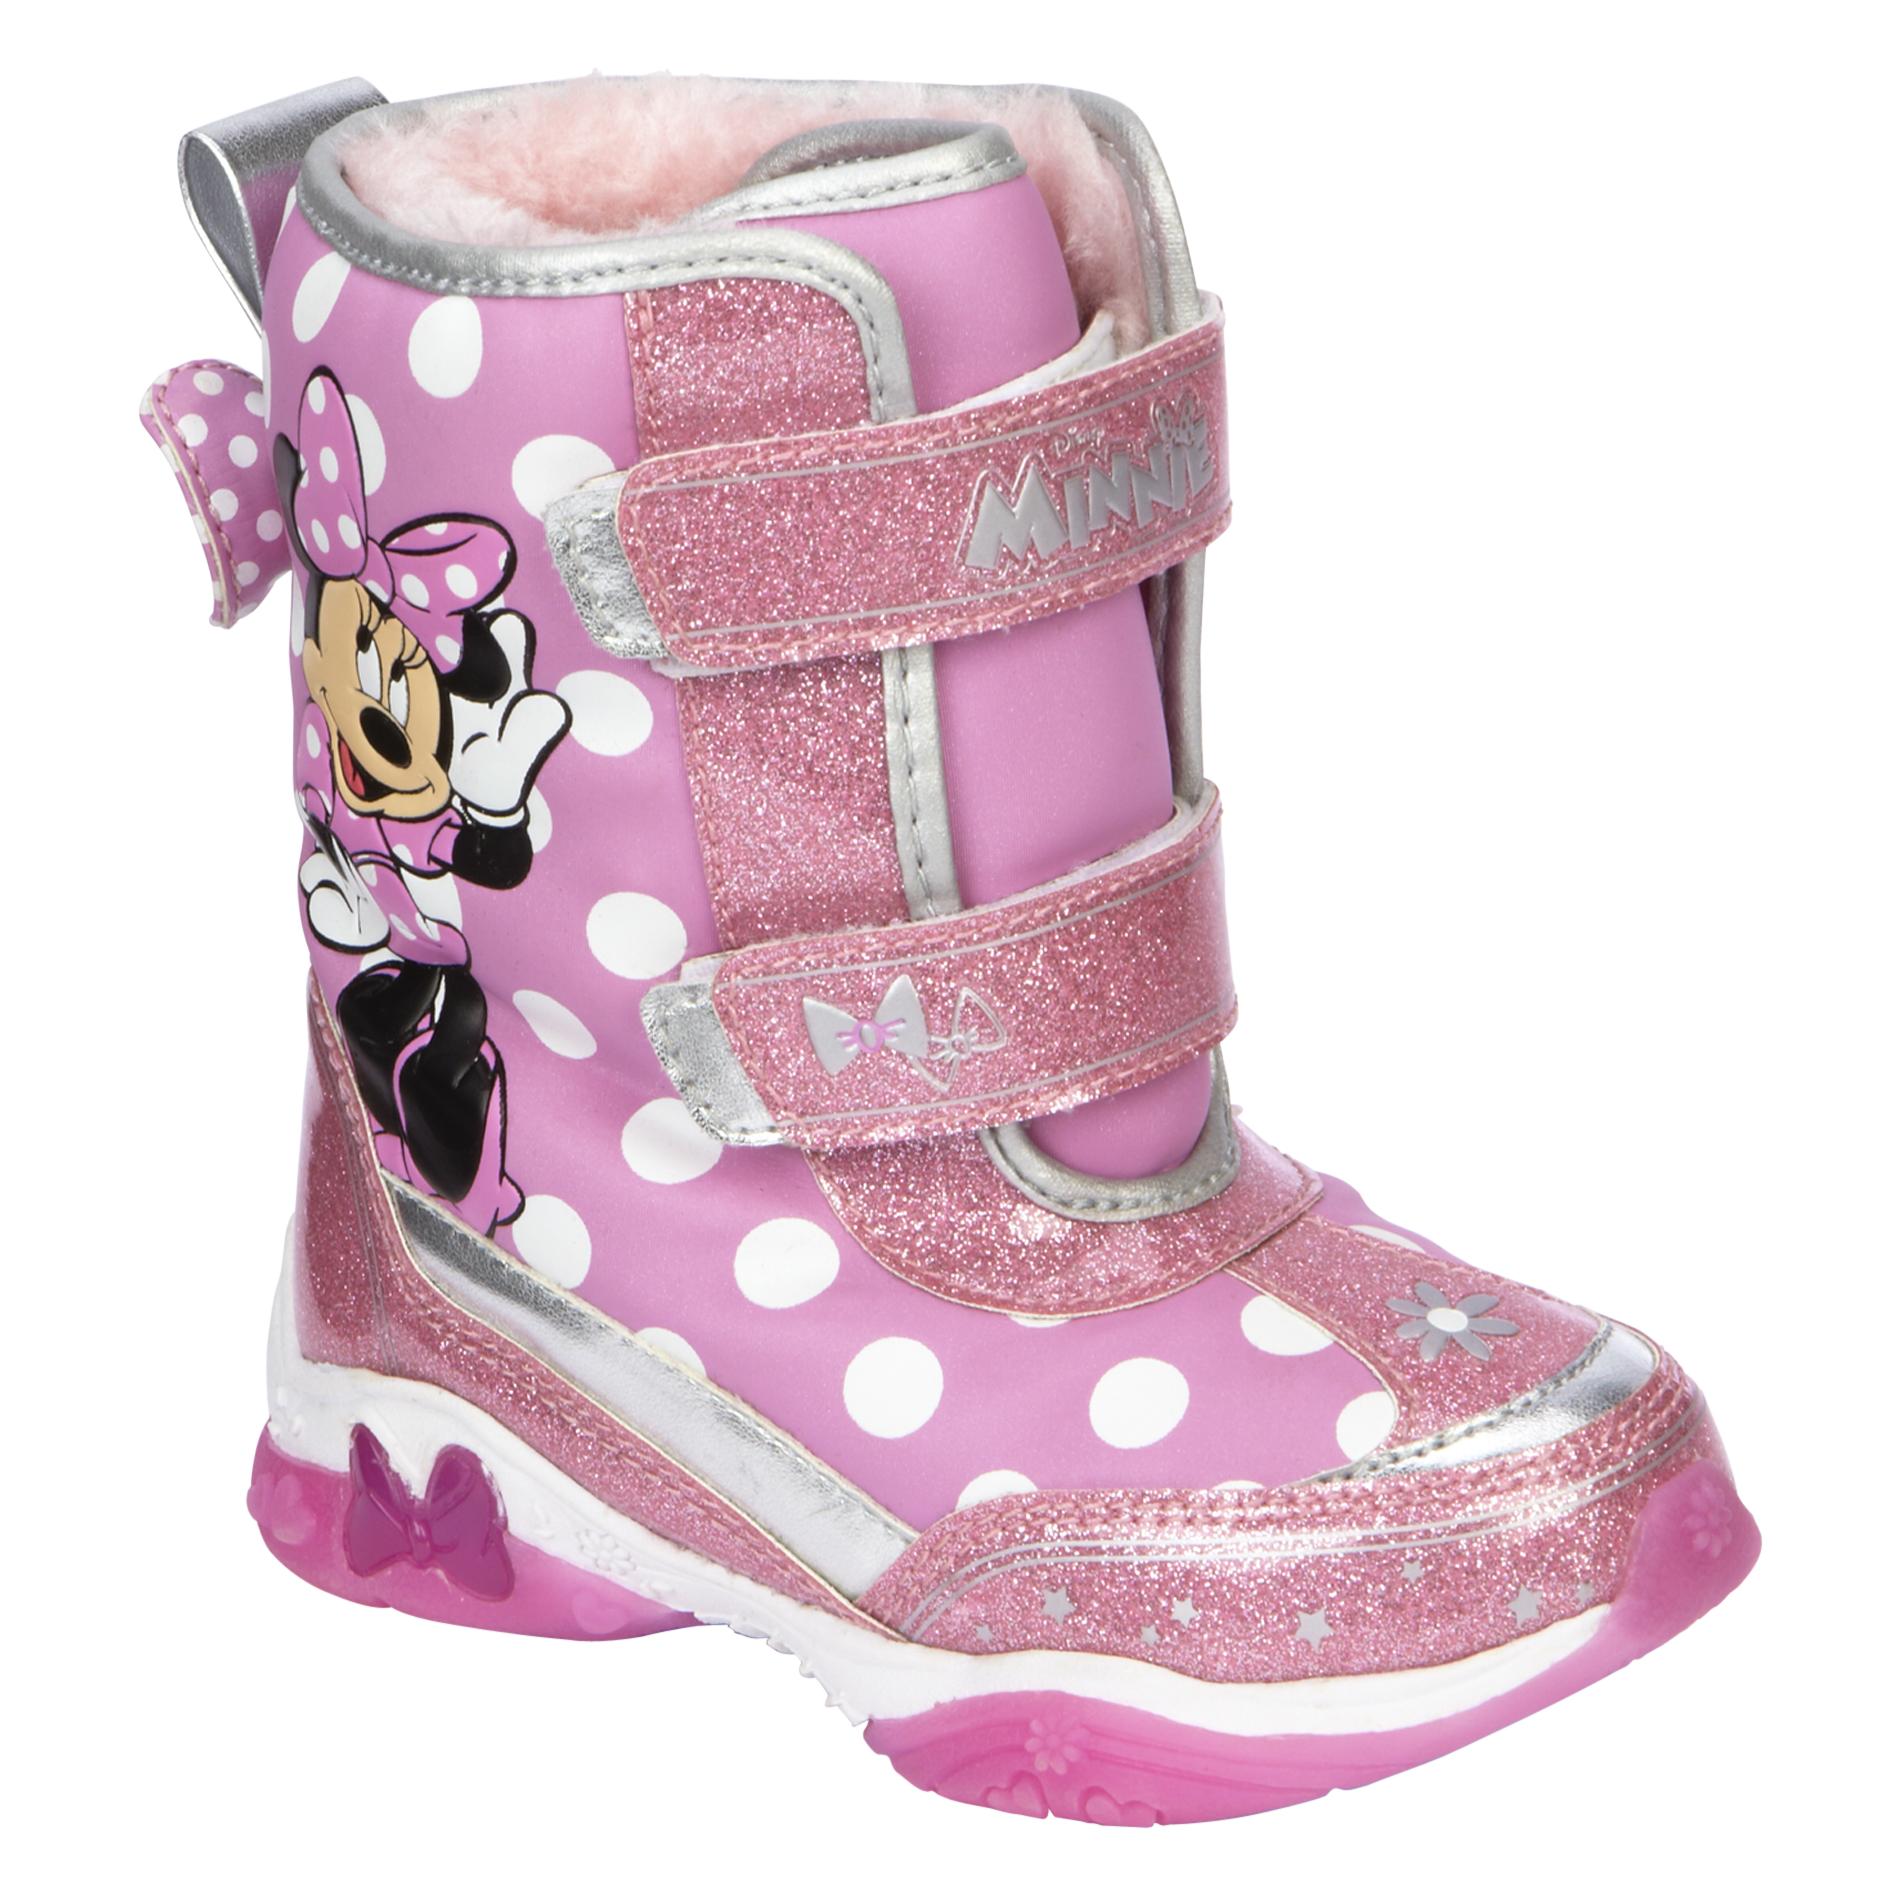 Disney Toddler Girl's Winter Boot Minnie - Pink